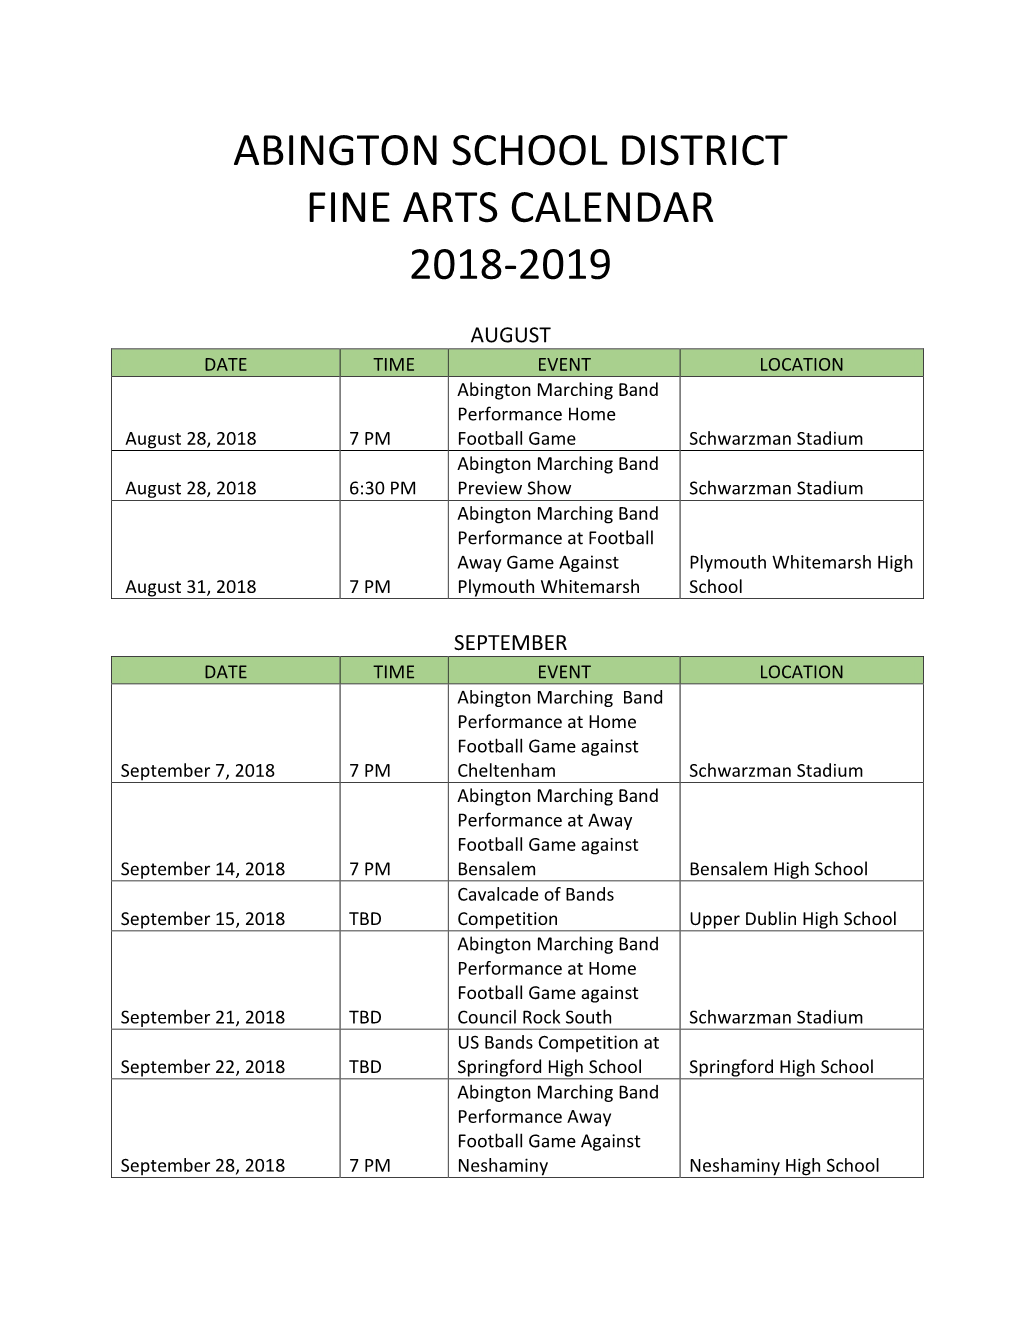 Abington School District Fine Arts Calendar 2018-2019